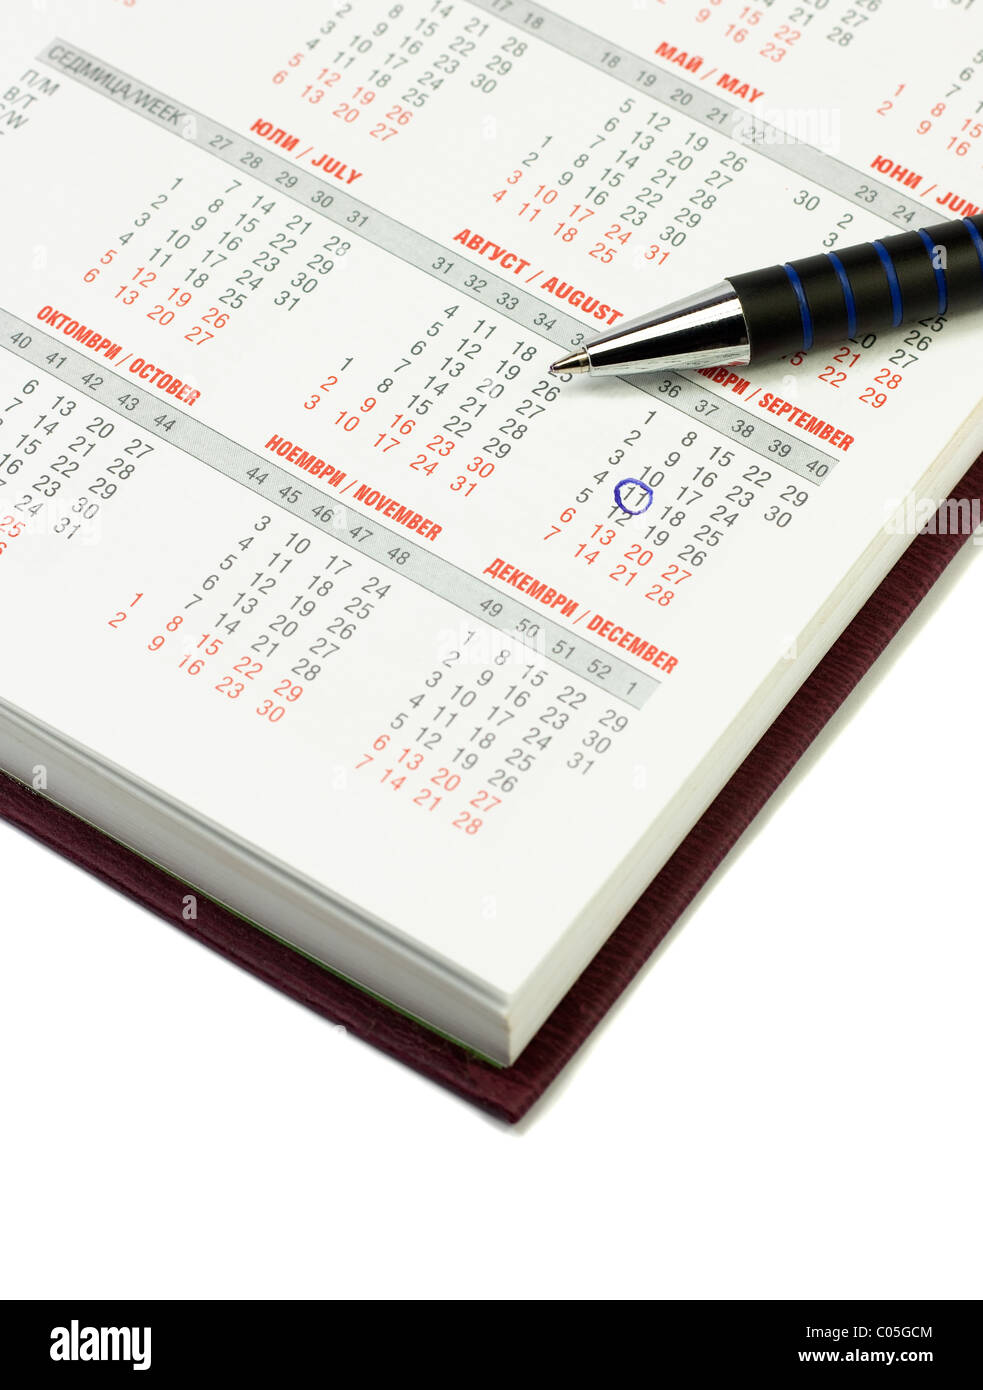 Calendar and pen over white background. September 11 checked Stock Photo